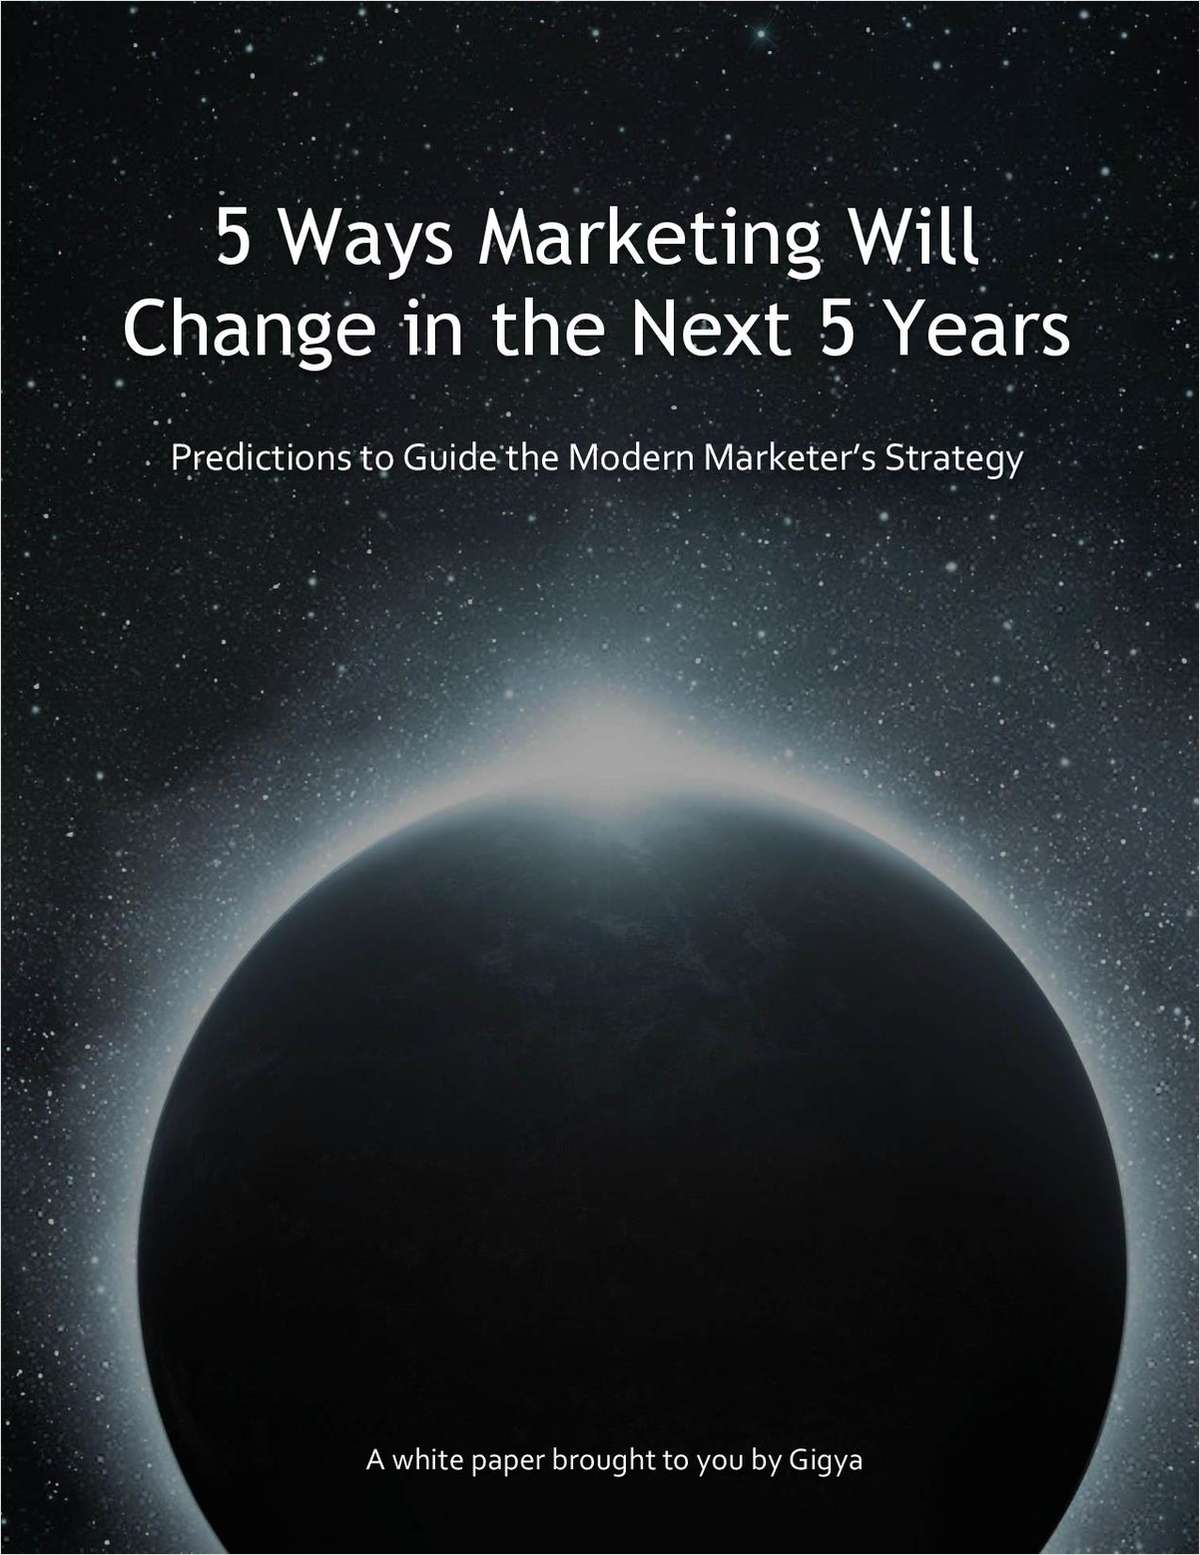 5 Ways Marketing Will Change in the Next 5 Years